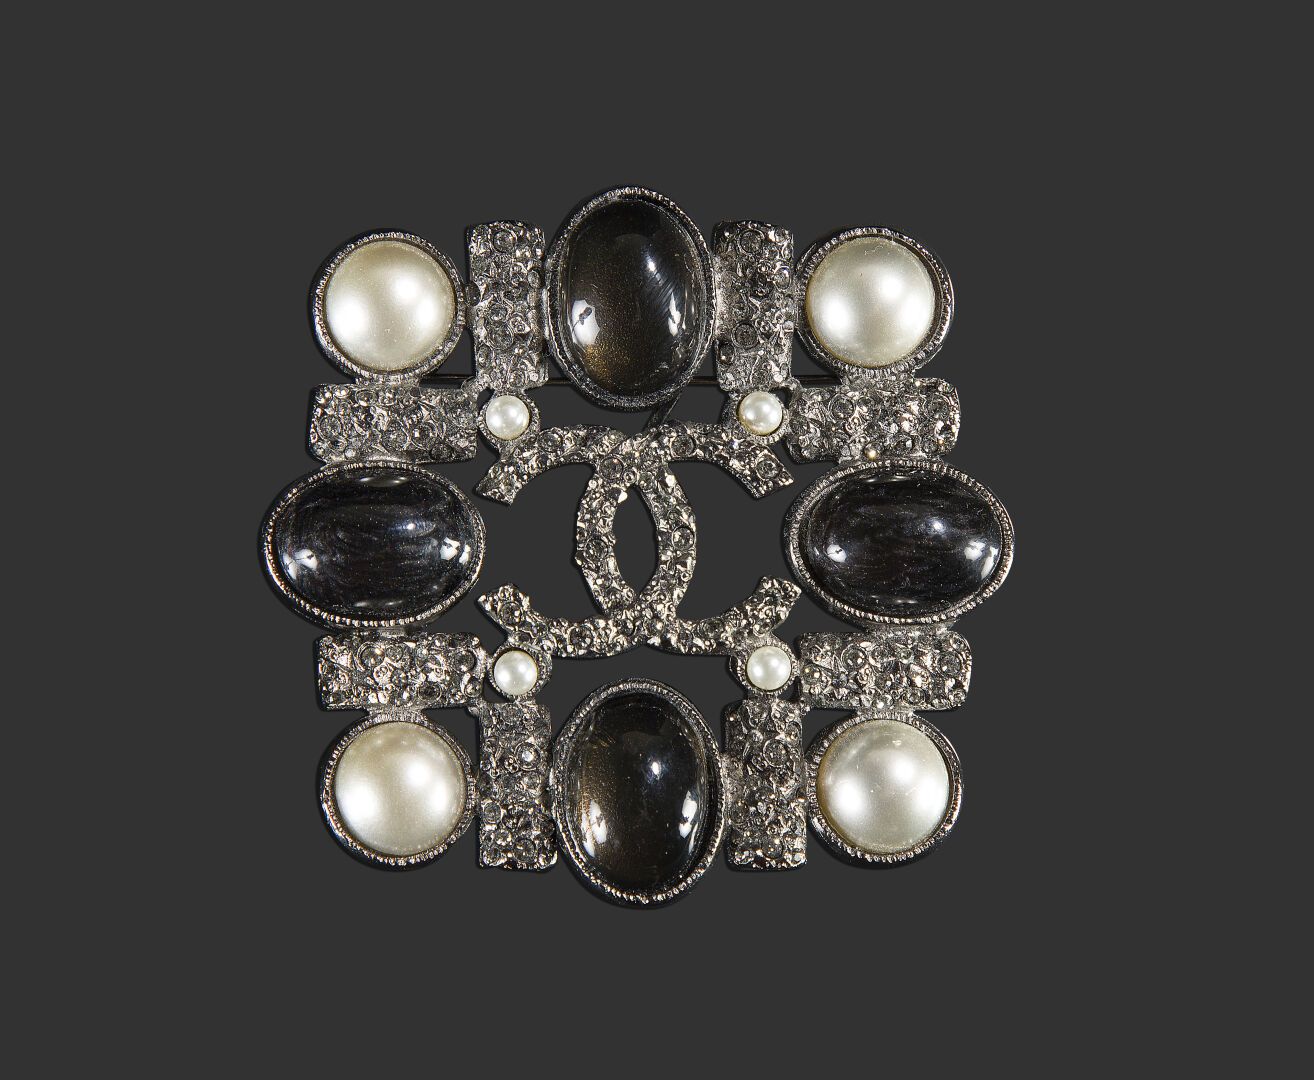 Null 香奈儿

镀银金属方形胸针。装饰有一个标志和镶嵌的水钻、珍珠和五彩斑斓的黑色凸圆形玻璃。签名。

尺寸：7 x 7 cm